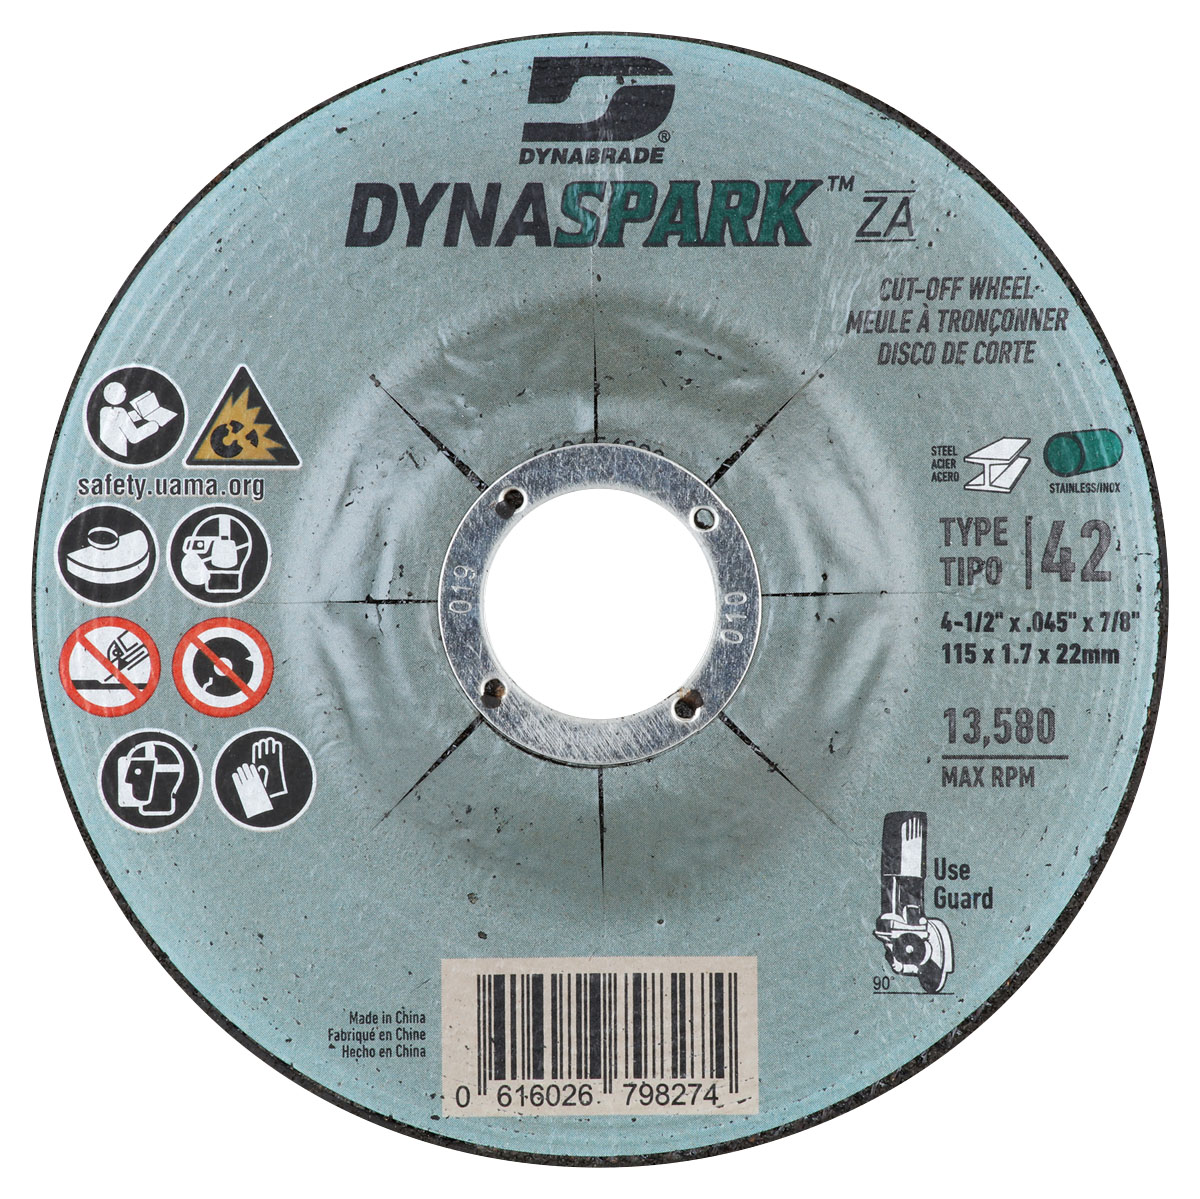 DynaSpark ZA 4.5" x .045" x 7/8" T42 Right Angle